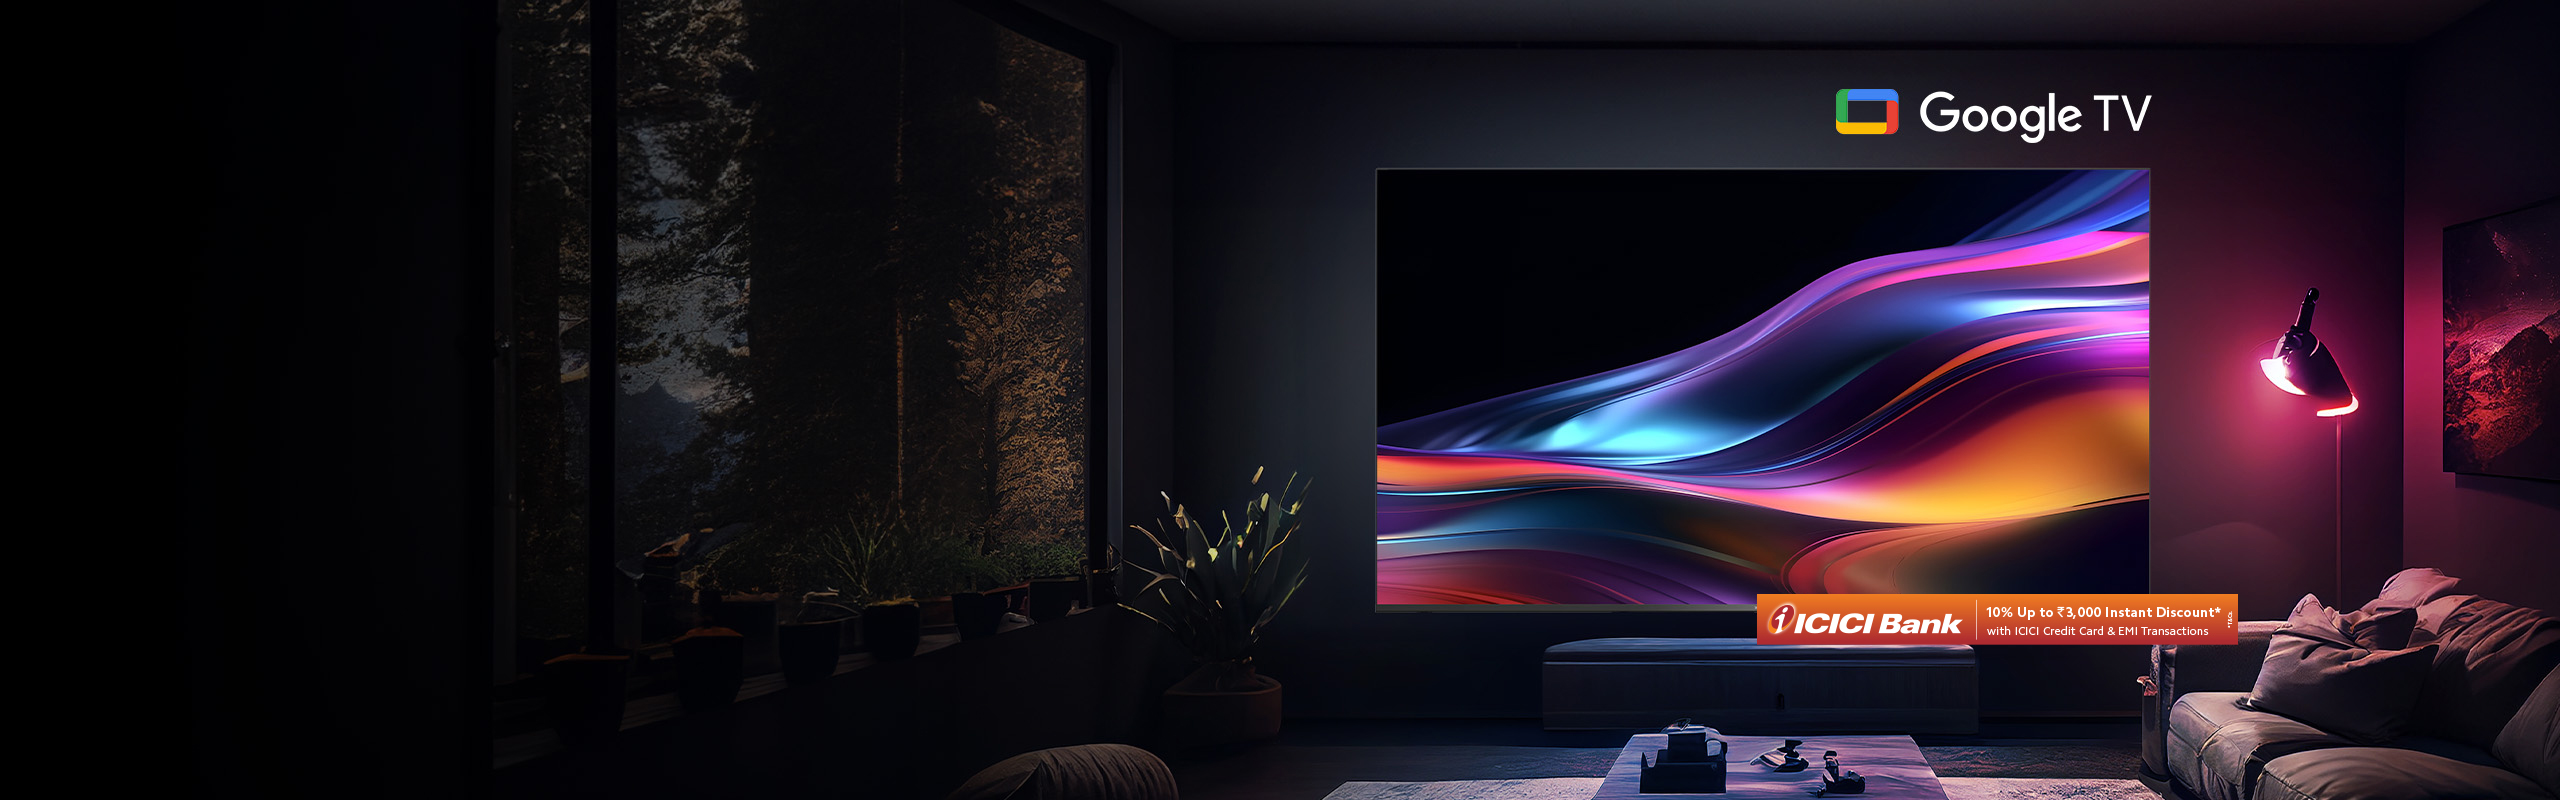 Xiaomi Smart TV X 43 (108 cm) 2023 Edition